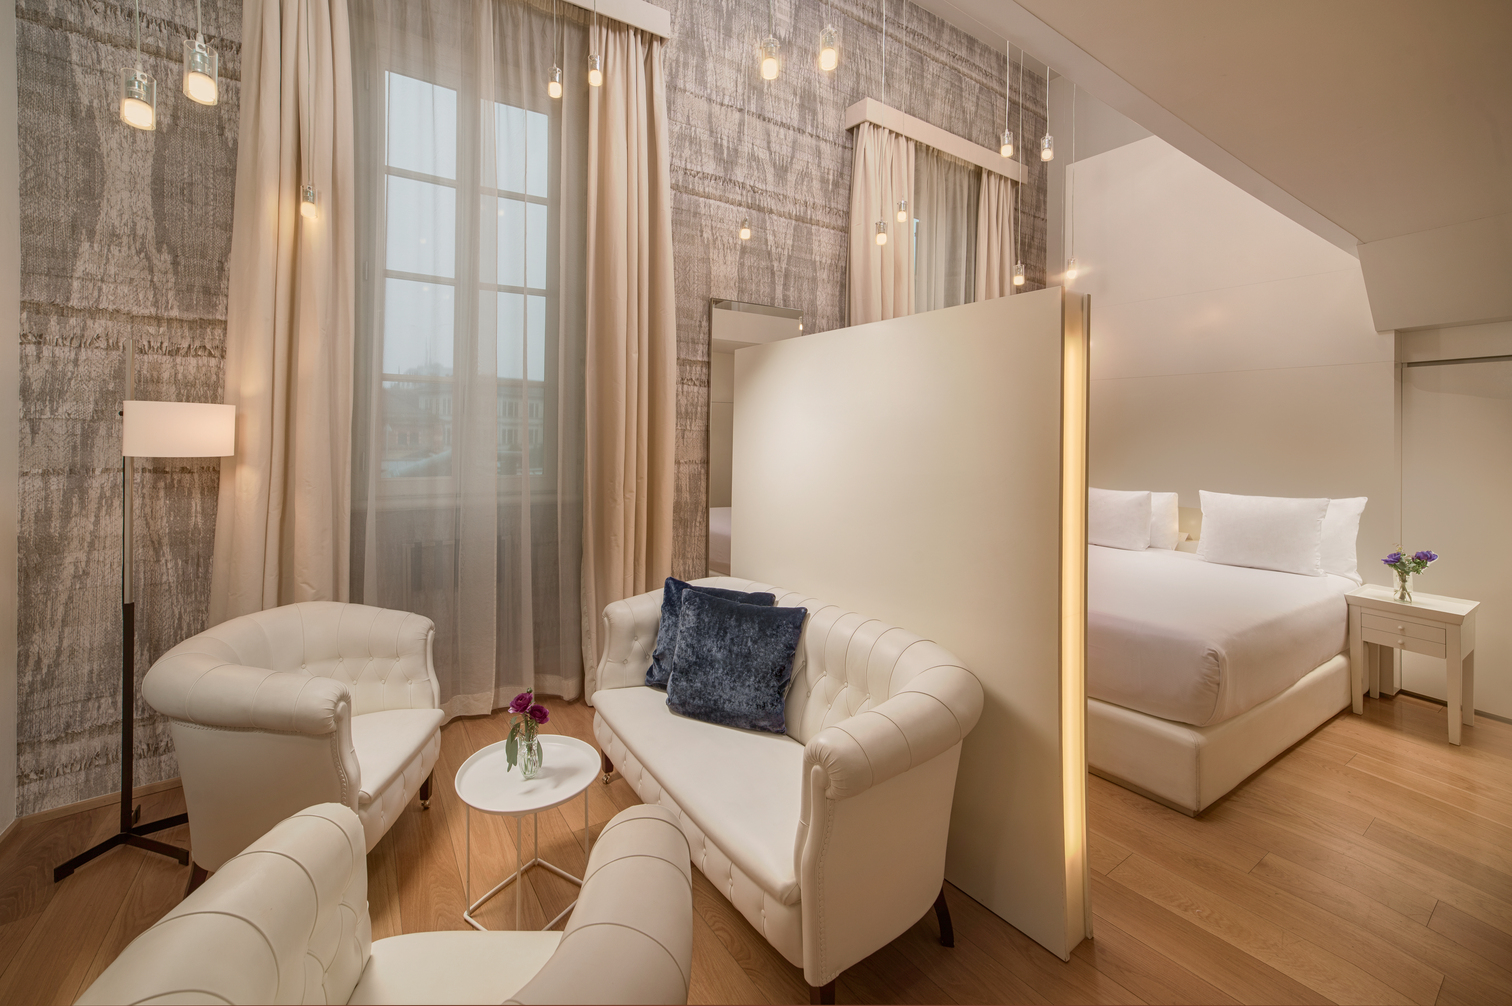 The Avani Palazzo Moscova Milan hotel's rooms are minimalist and fashionably chic